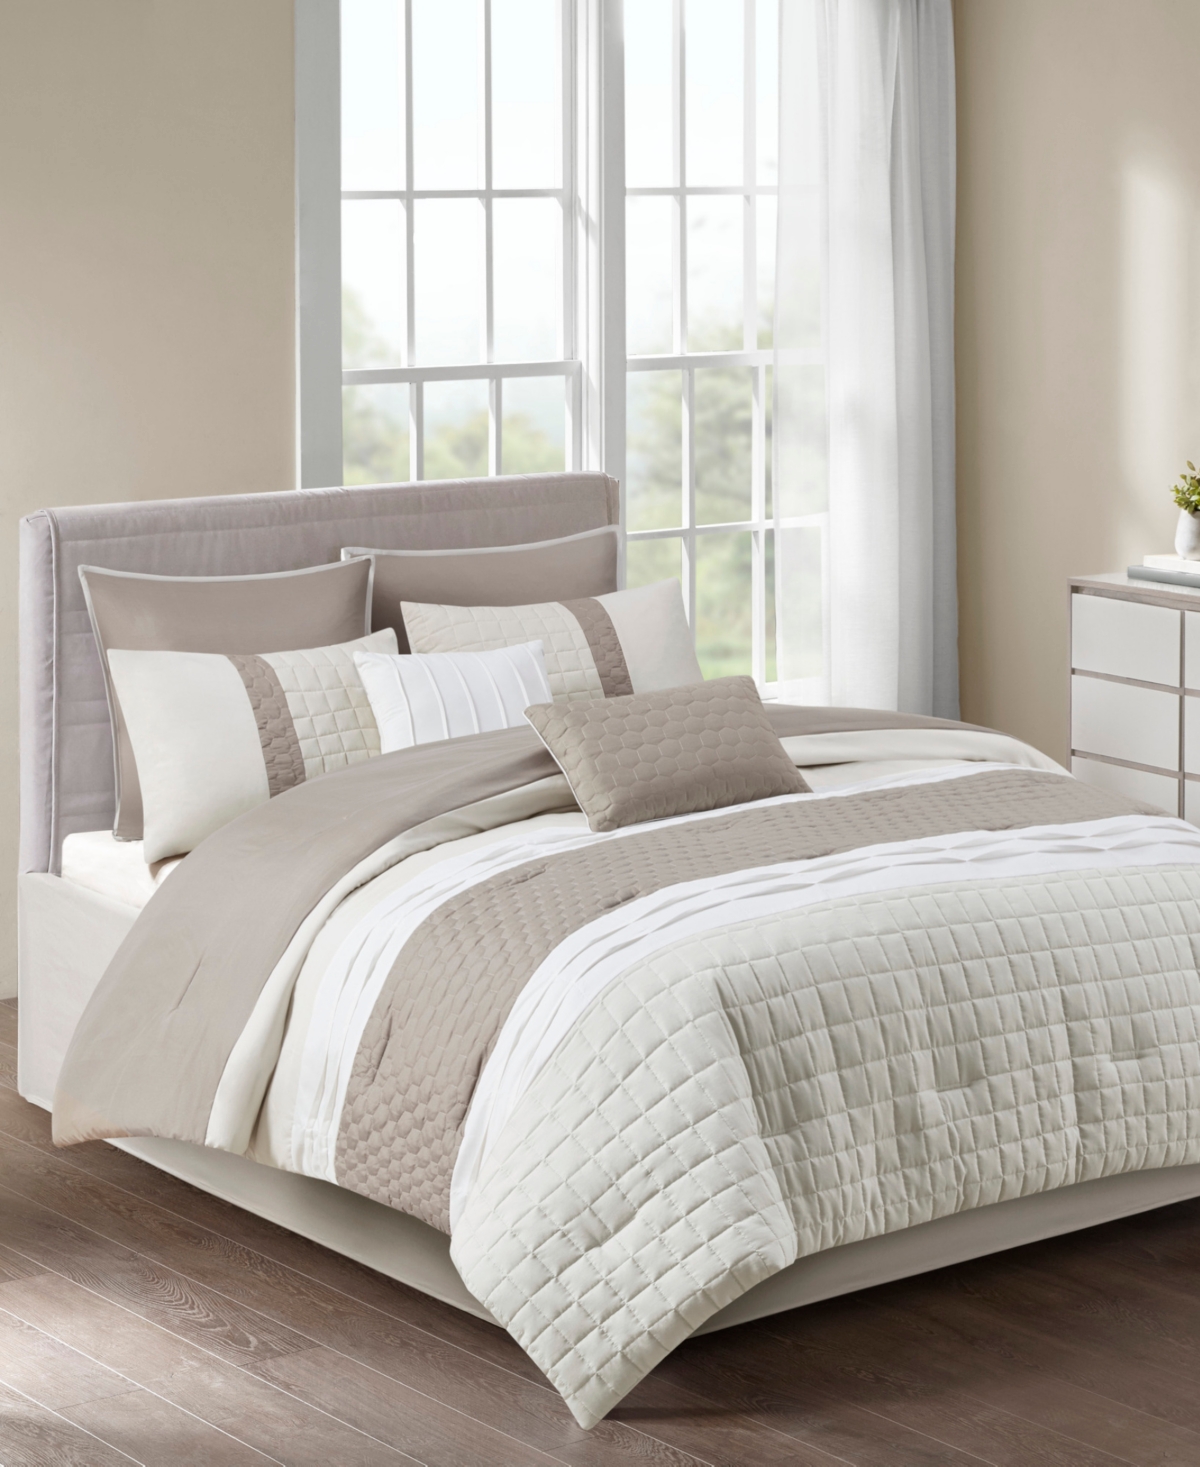 510 Design Tinsley 8-Pc. Comforter Set, Queen Bedding